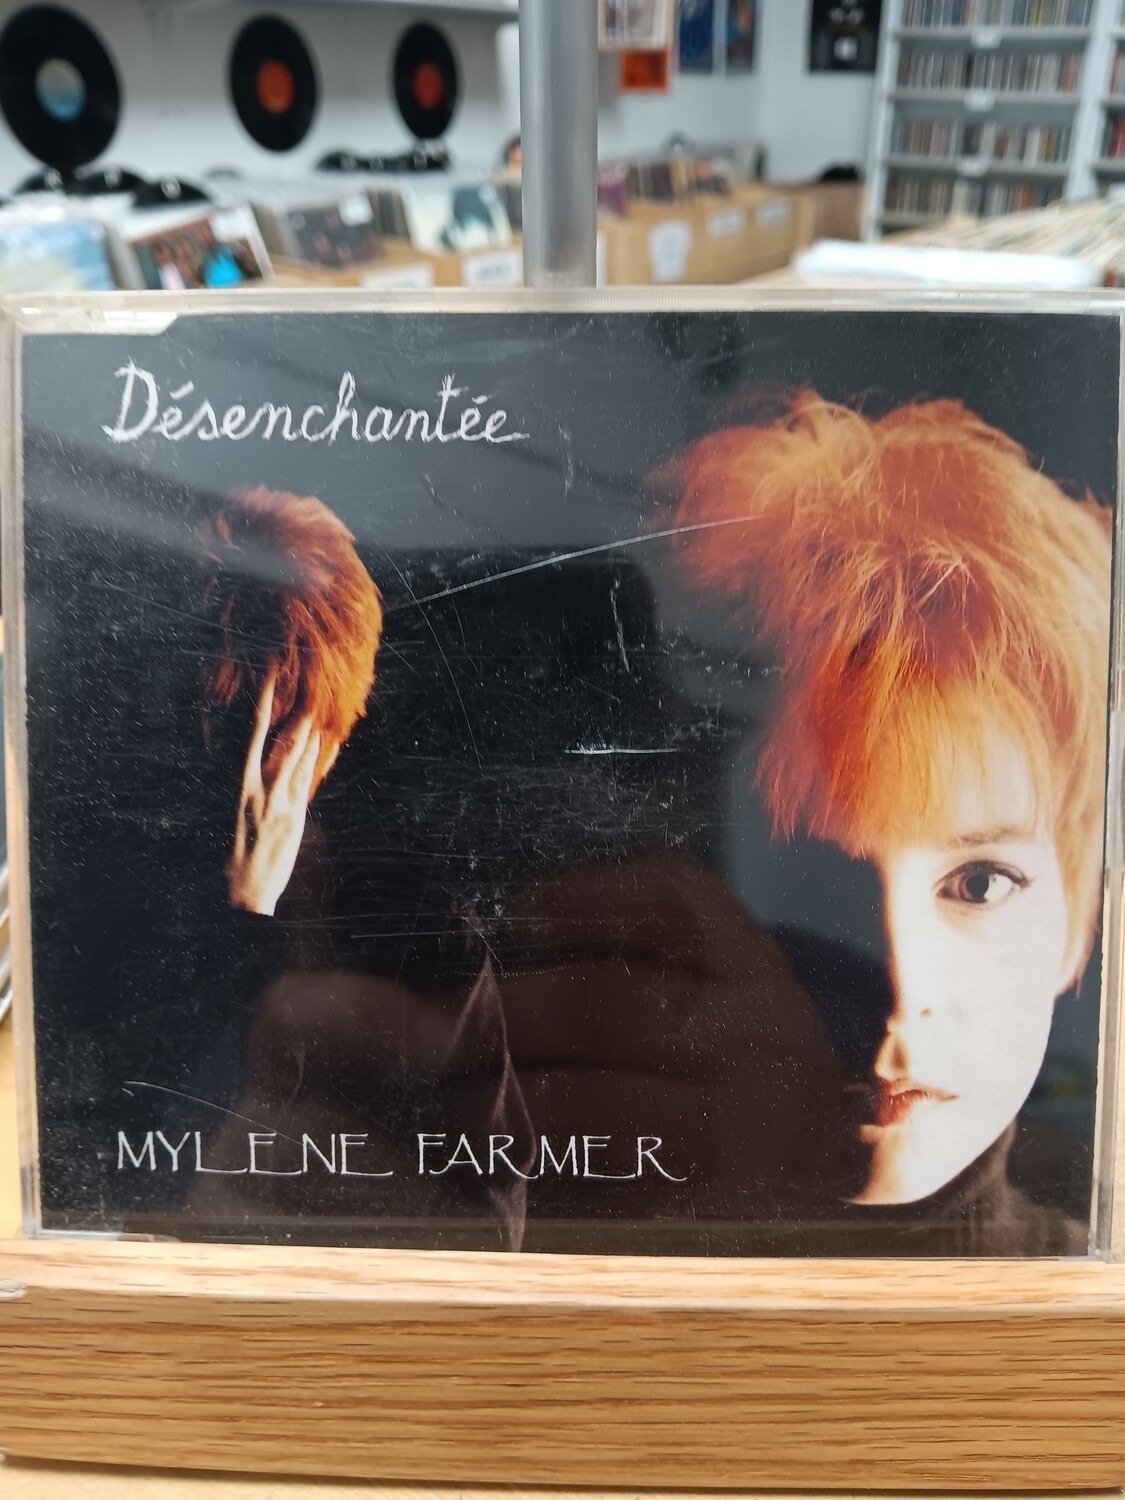 Mylène Farmer - Désenchantée (CD single)